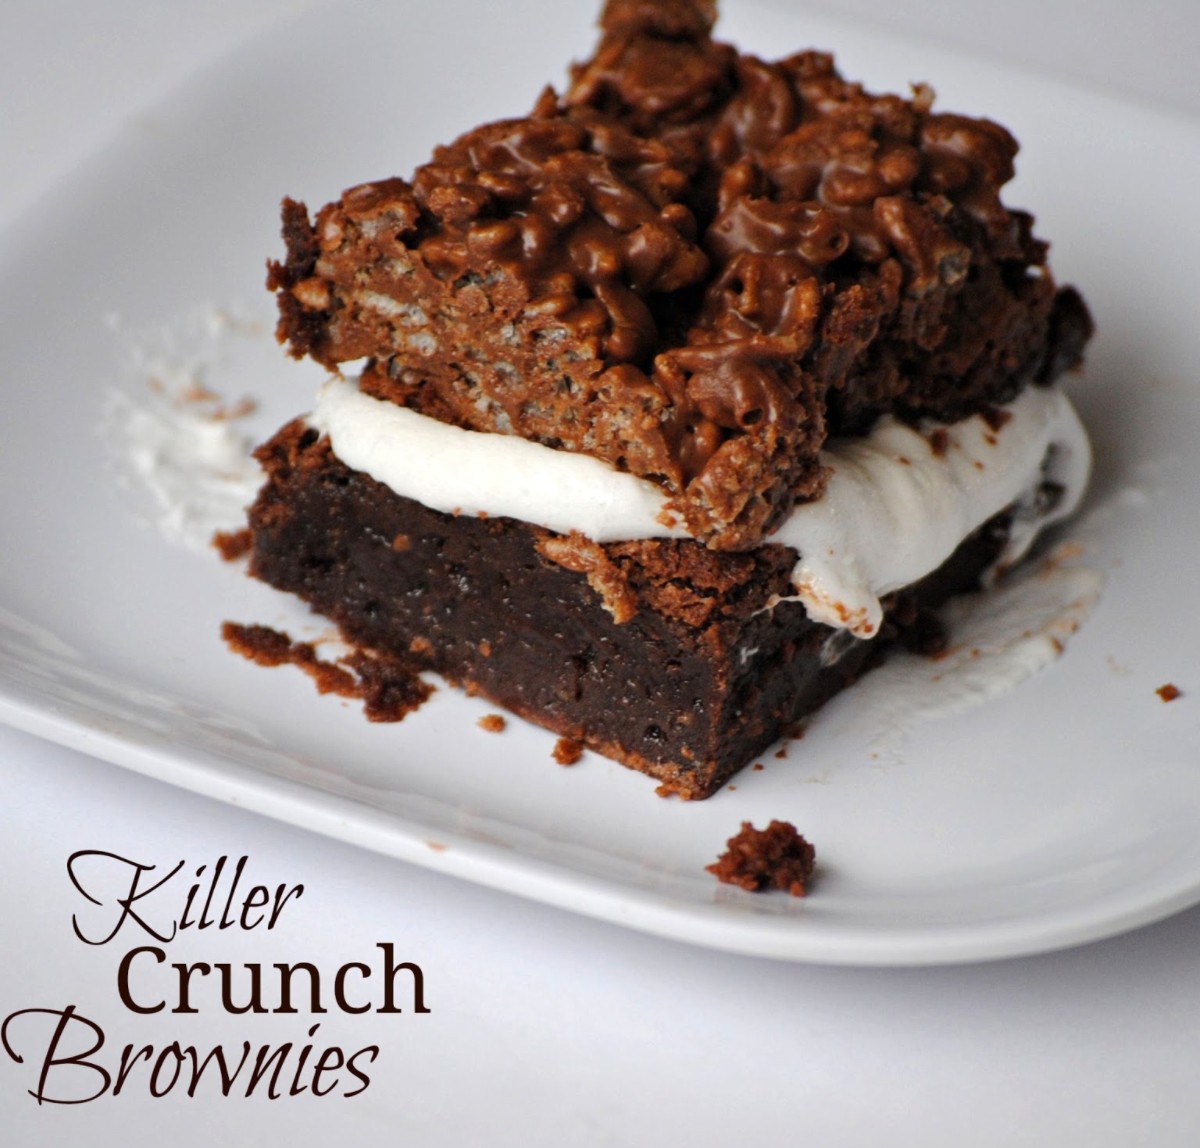 Killler Crunch Brownies